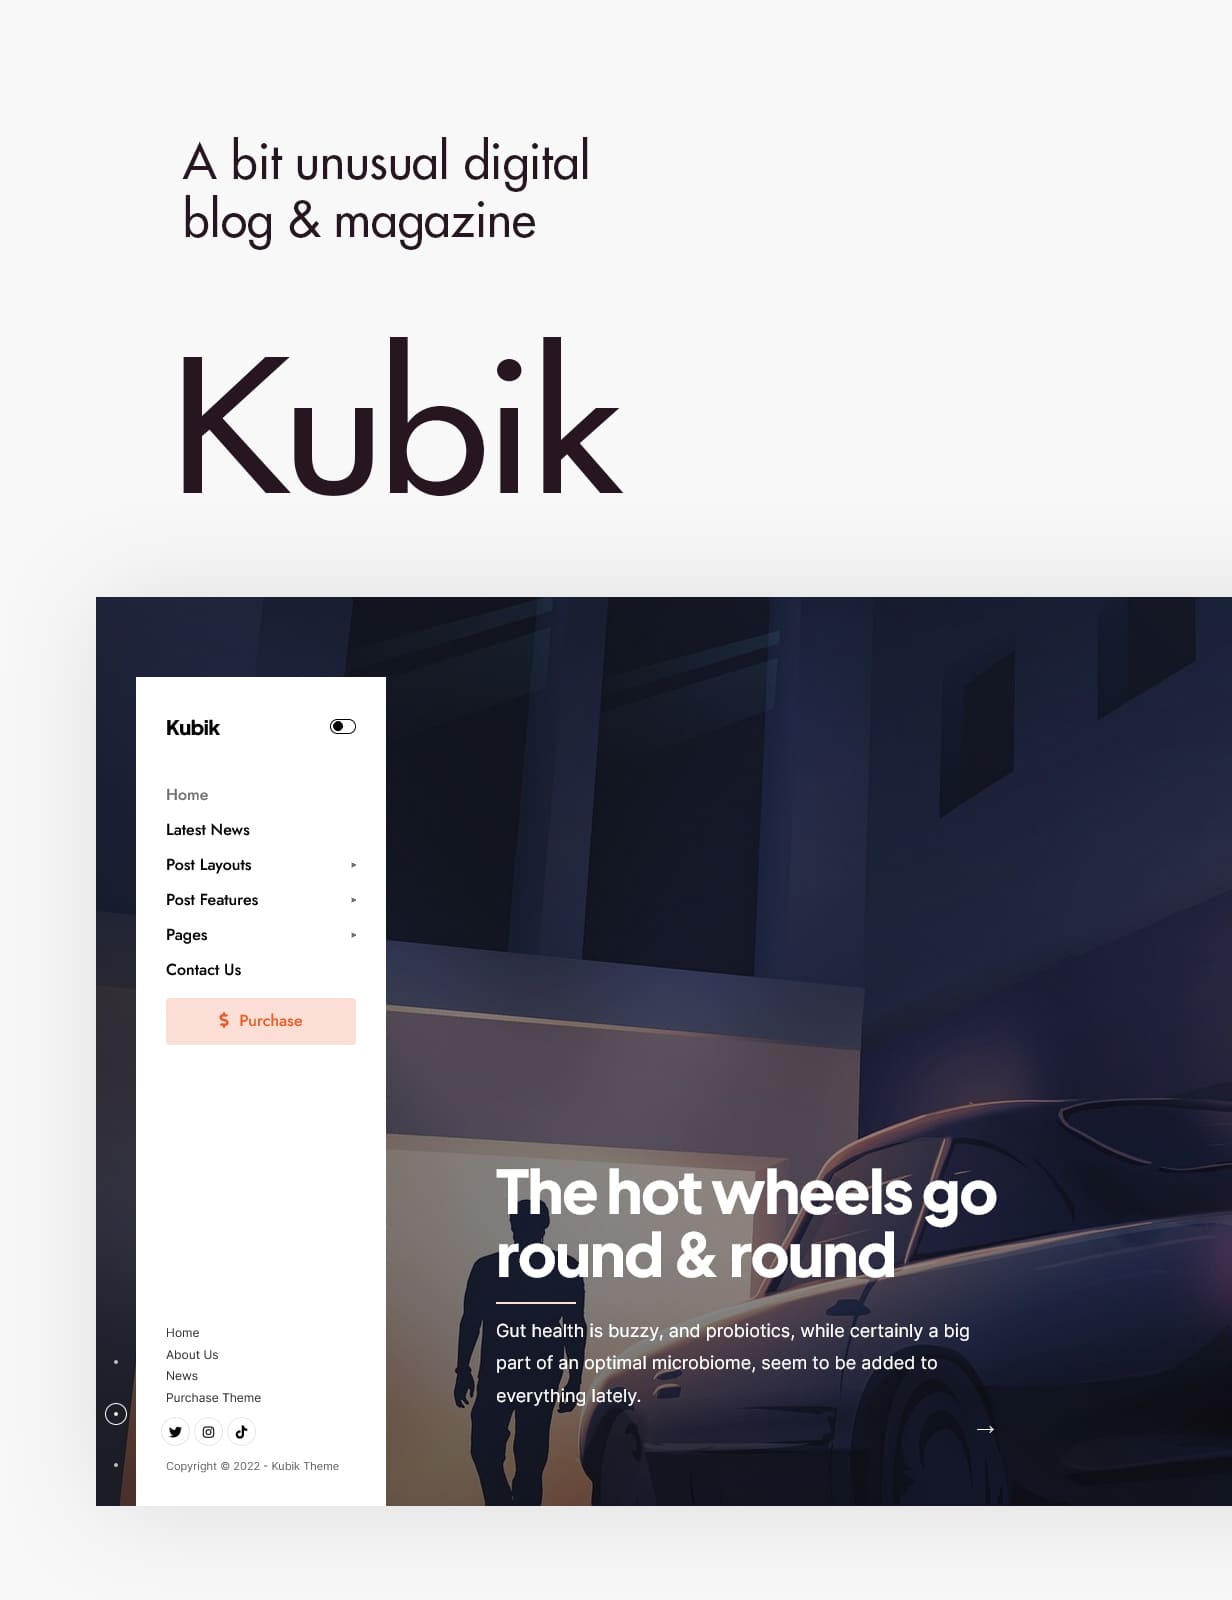 Kubik - An Unusual Digital Blog & Magazine.